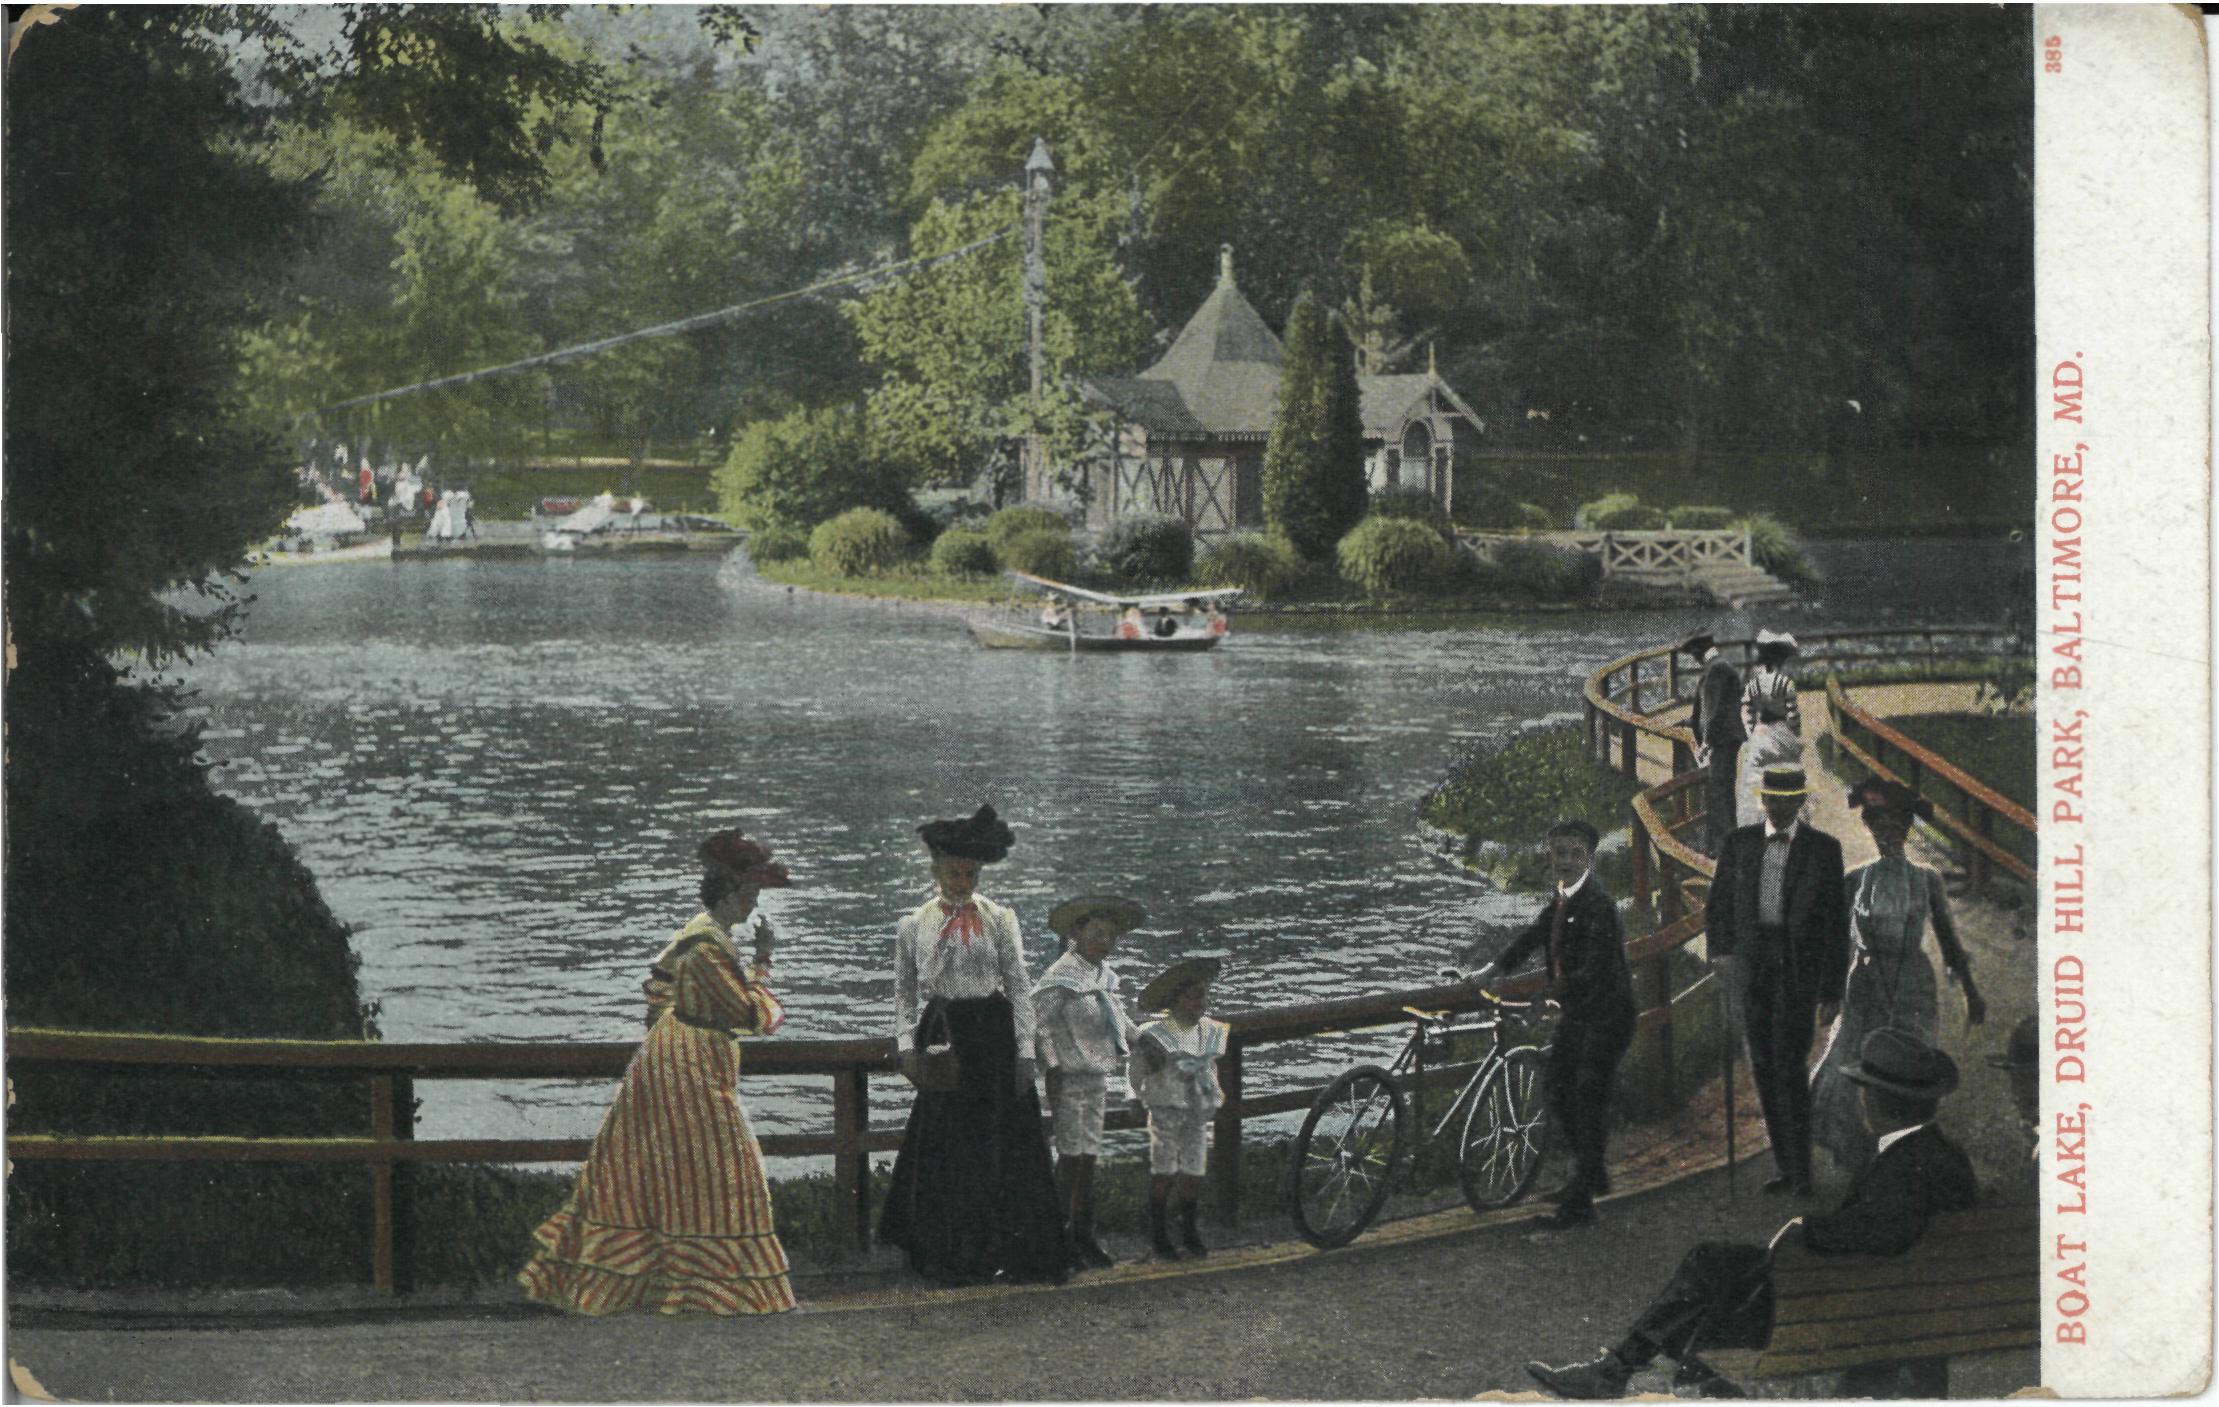 Postcard of Boat Lake at Druid Hill Park